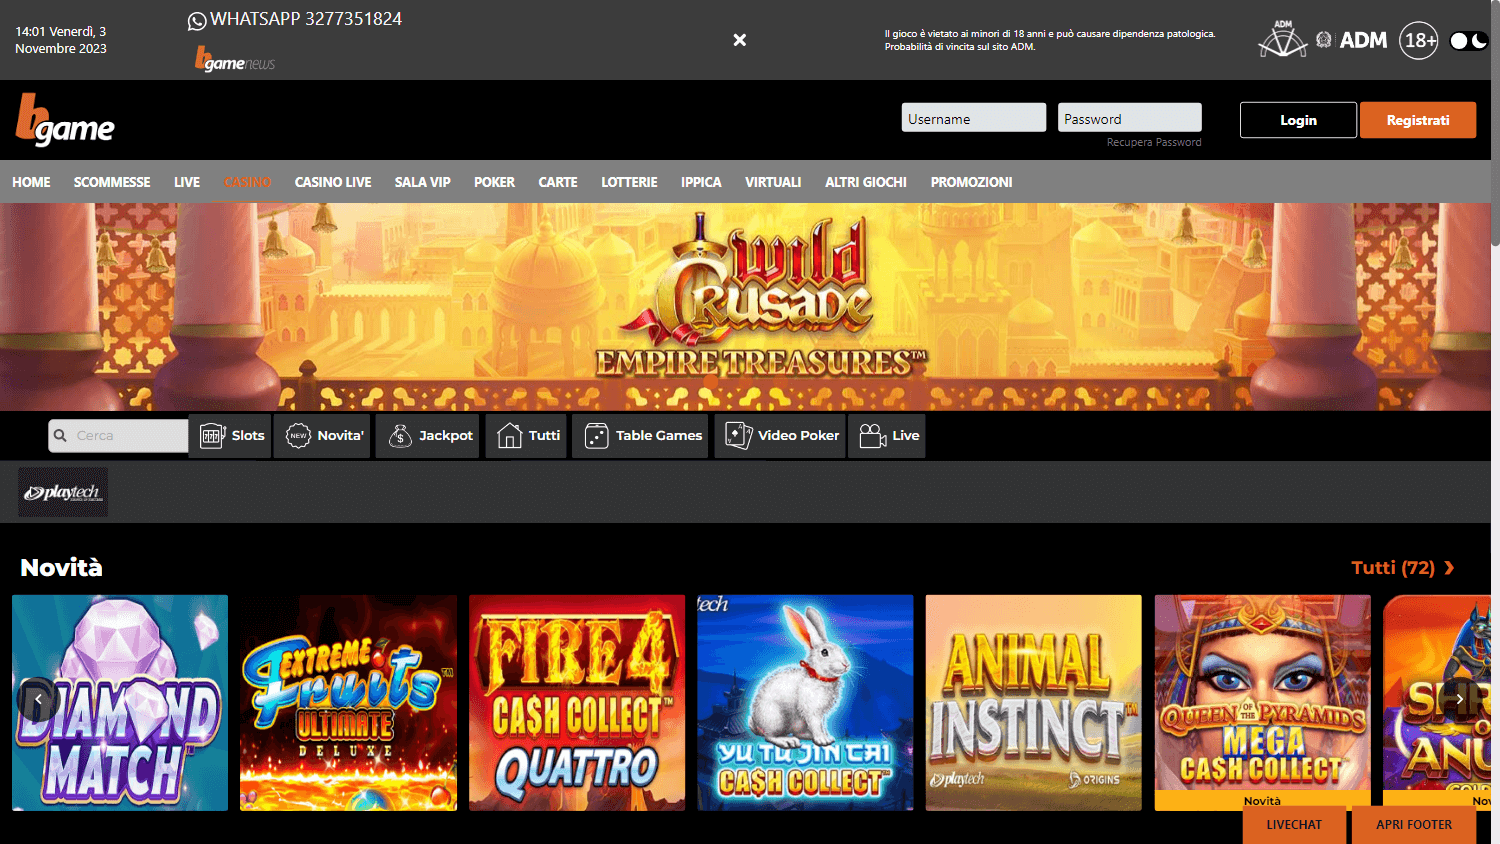 bgame_casino_homepage_desktop